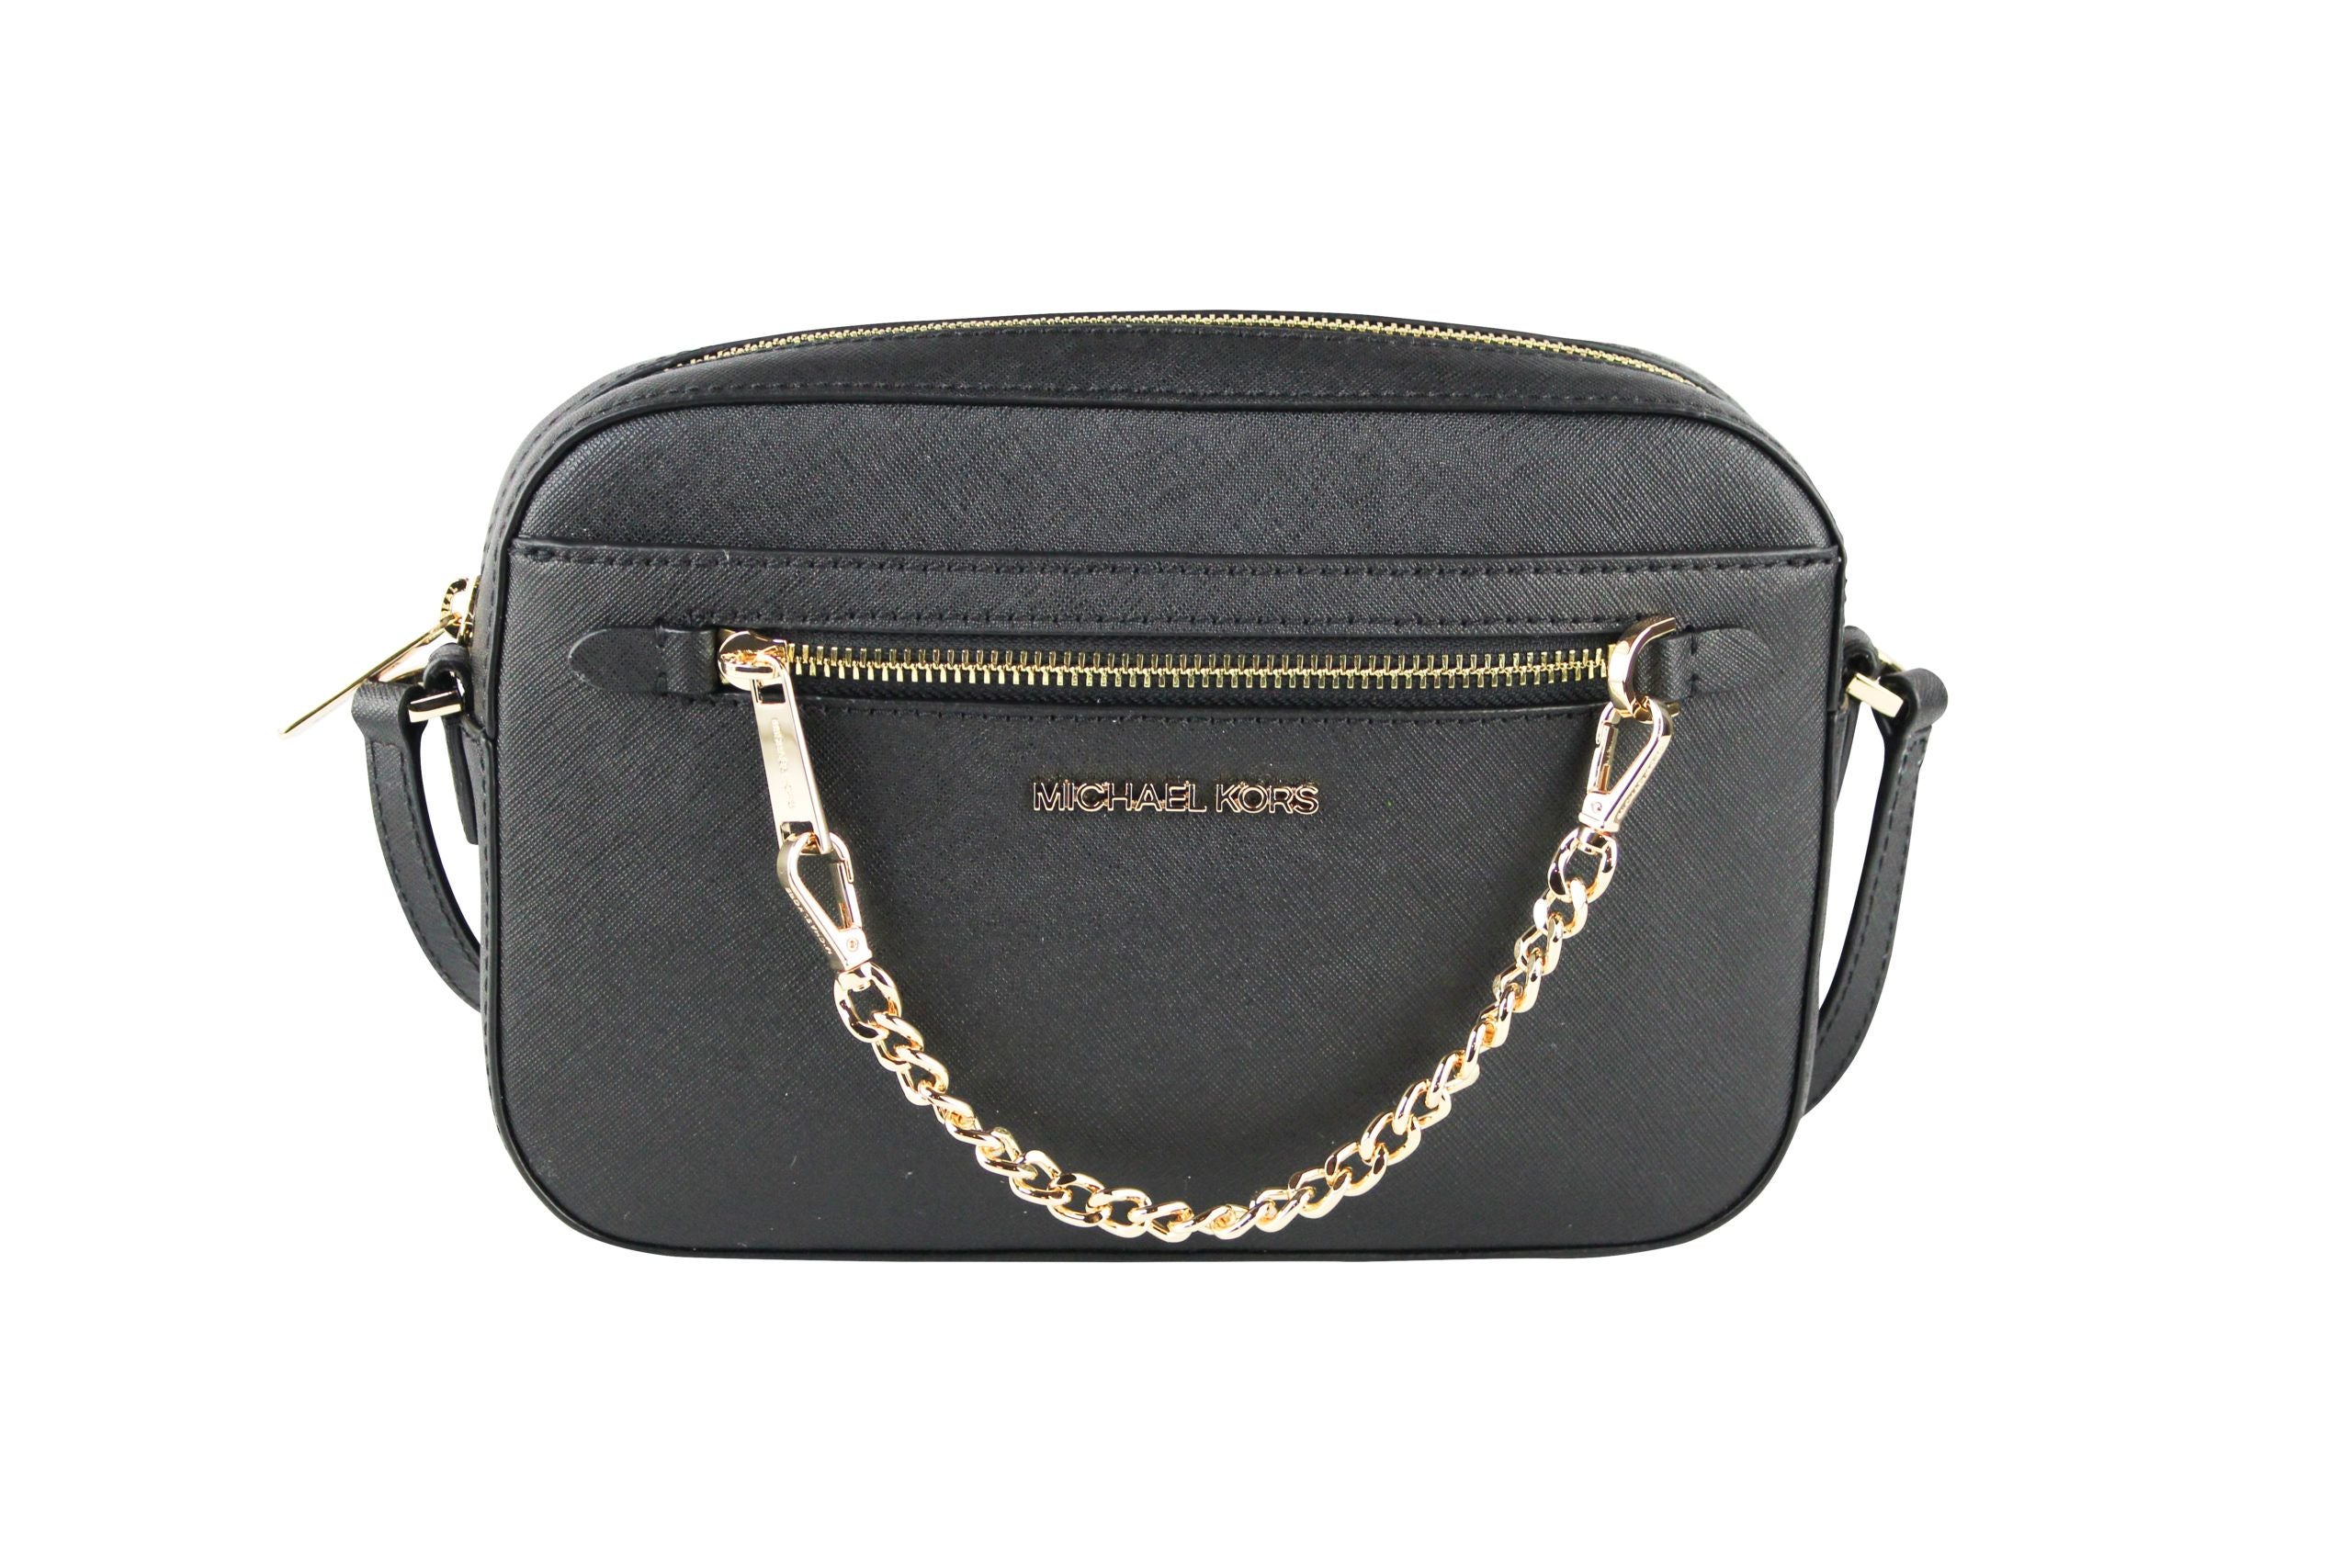 Jet Set Item Large East West Saffiano Leather Zip Chain Crossbody Handbag (Black Solid/Gold) - Divitiae Glamour